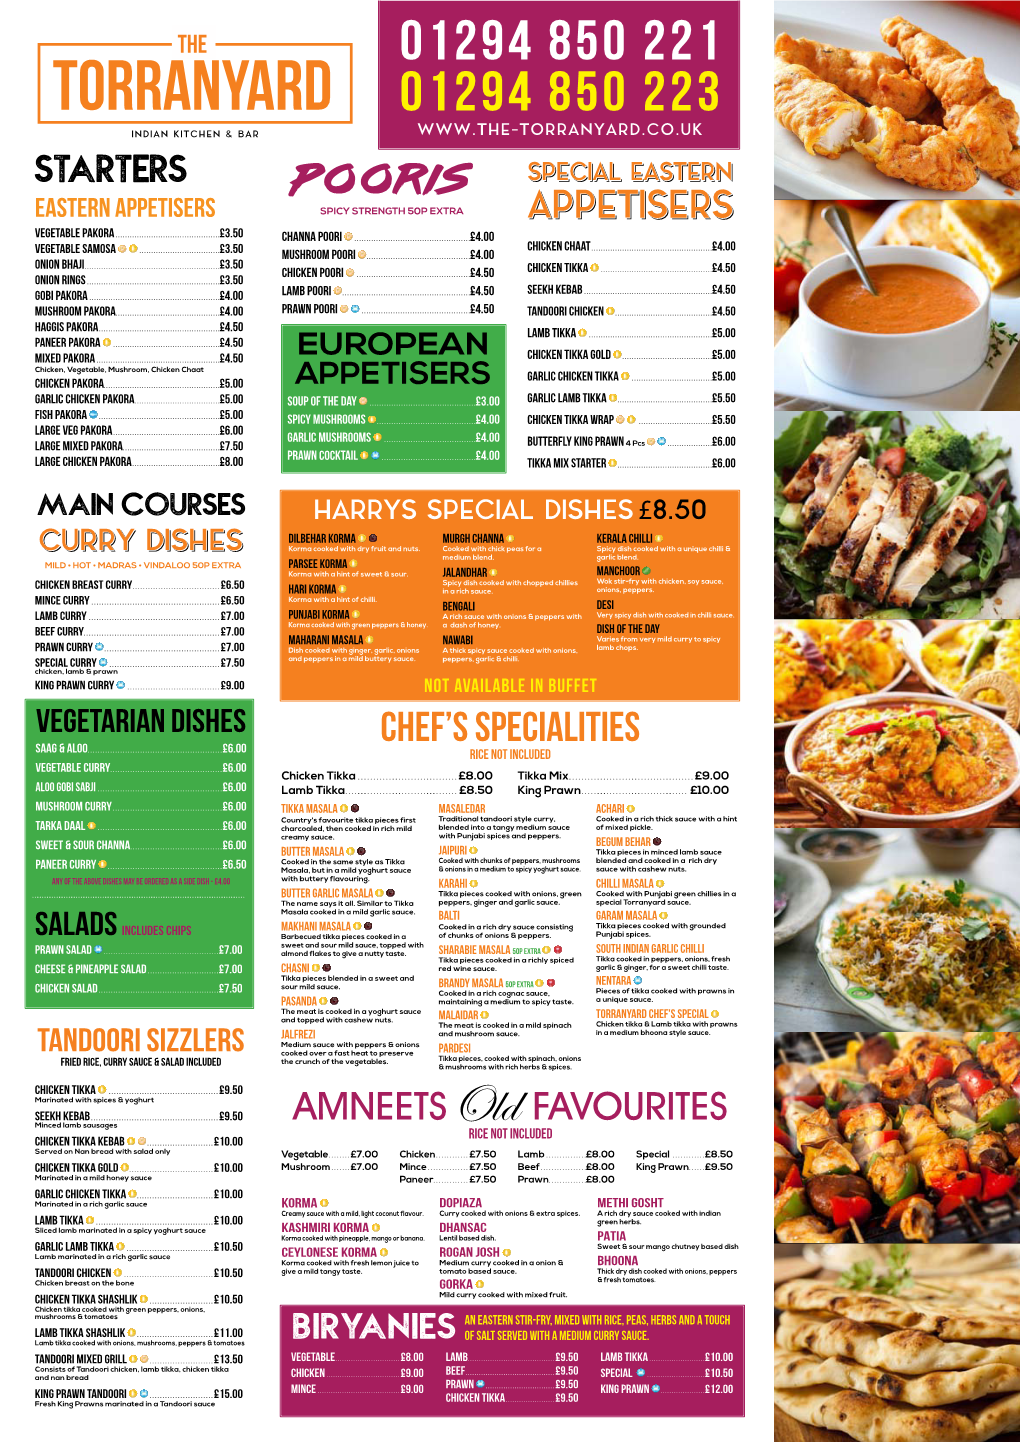 TORRANYARD 01294 850 223 Indian Kitchen & Bar Starters Pooris Specialspecial Eeaassterntern Eastern Appetisers Spicy Strength 50P Extra